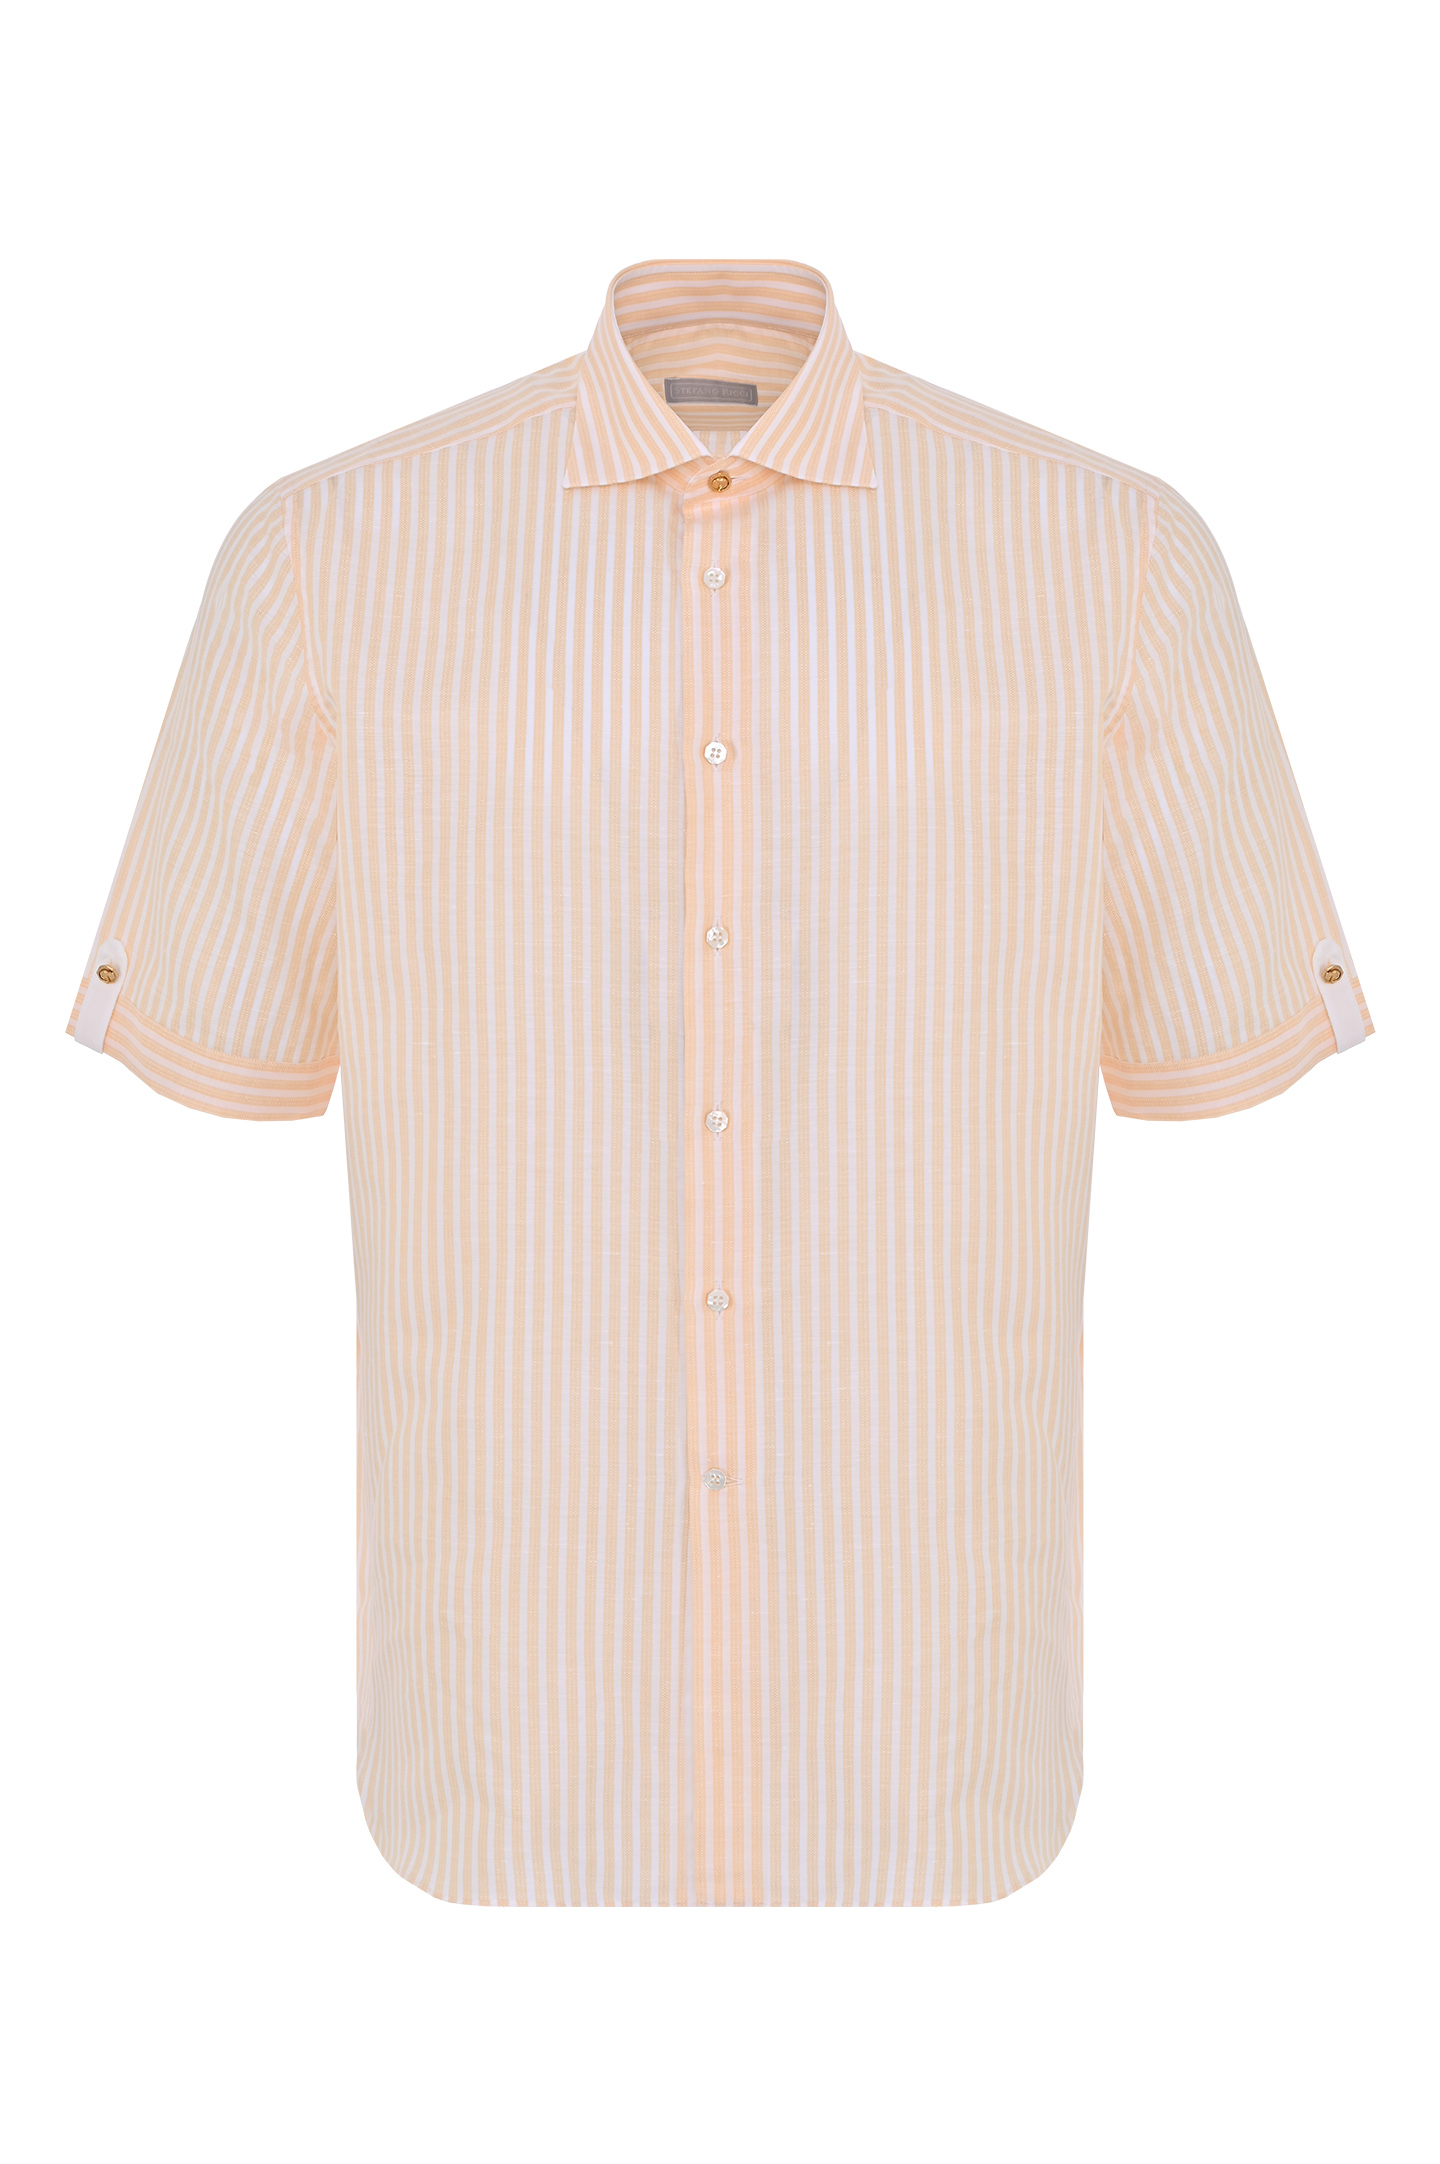 Рубашка STEFANO RICCI MC006729 R1258, цвет: Оранжевый, Мужской